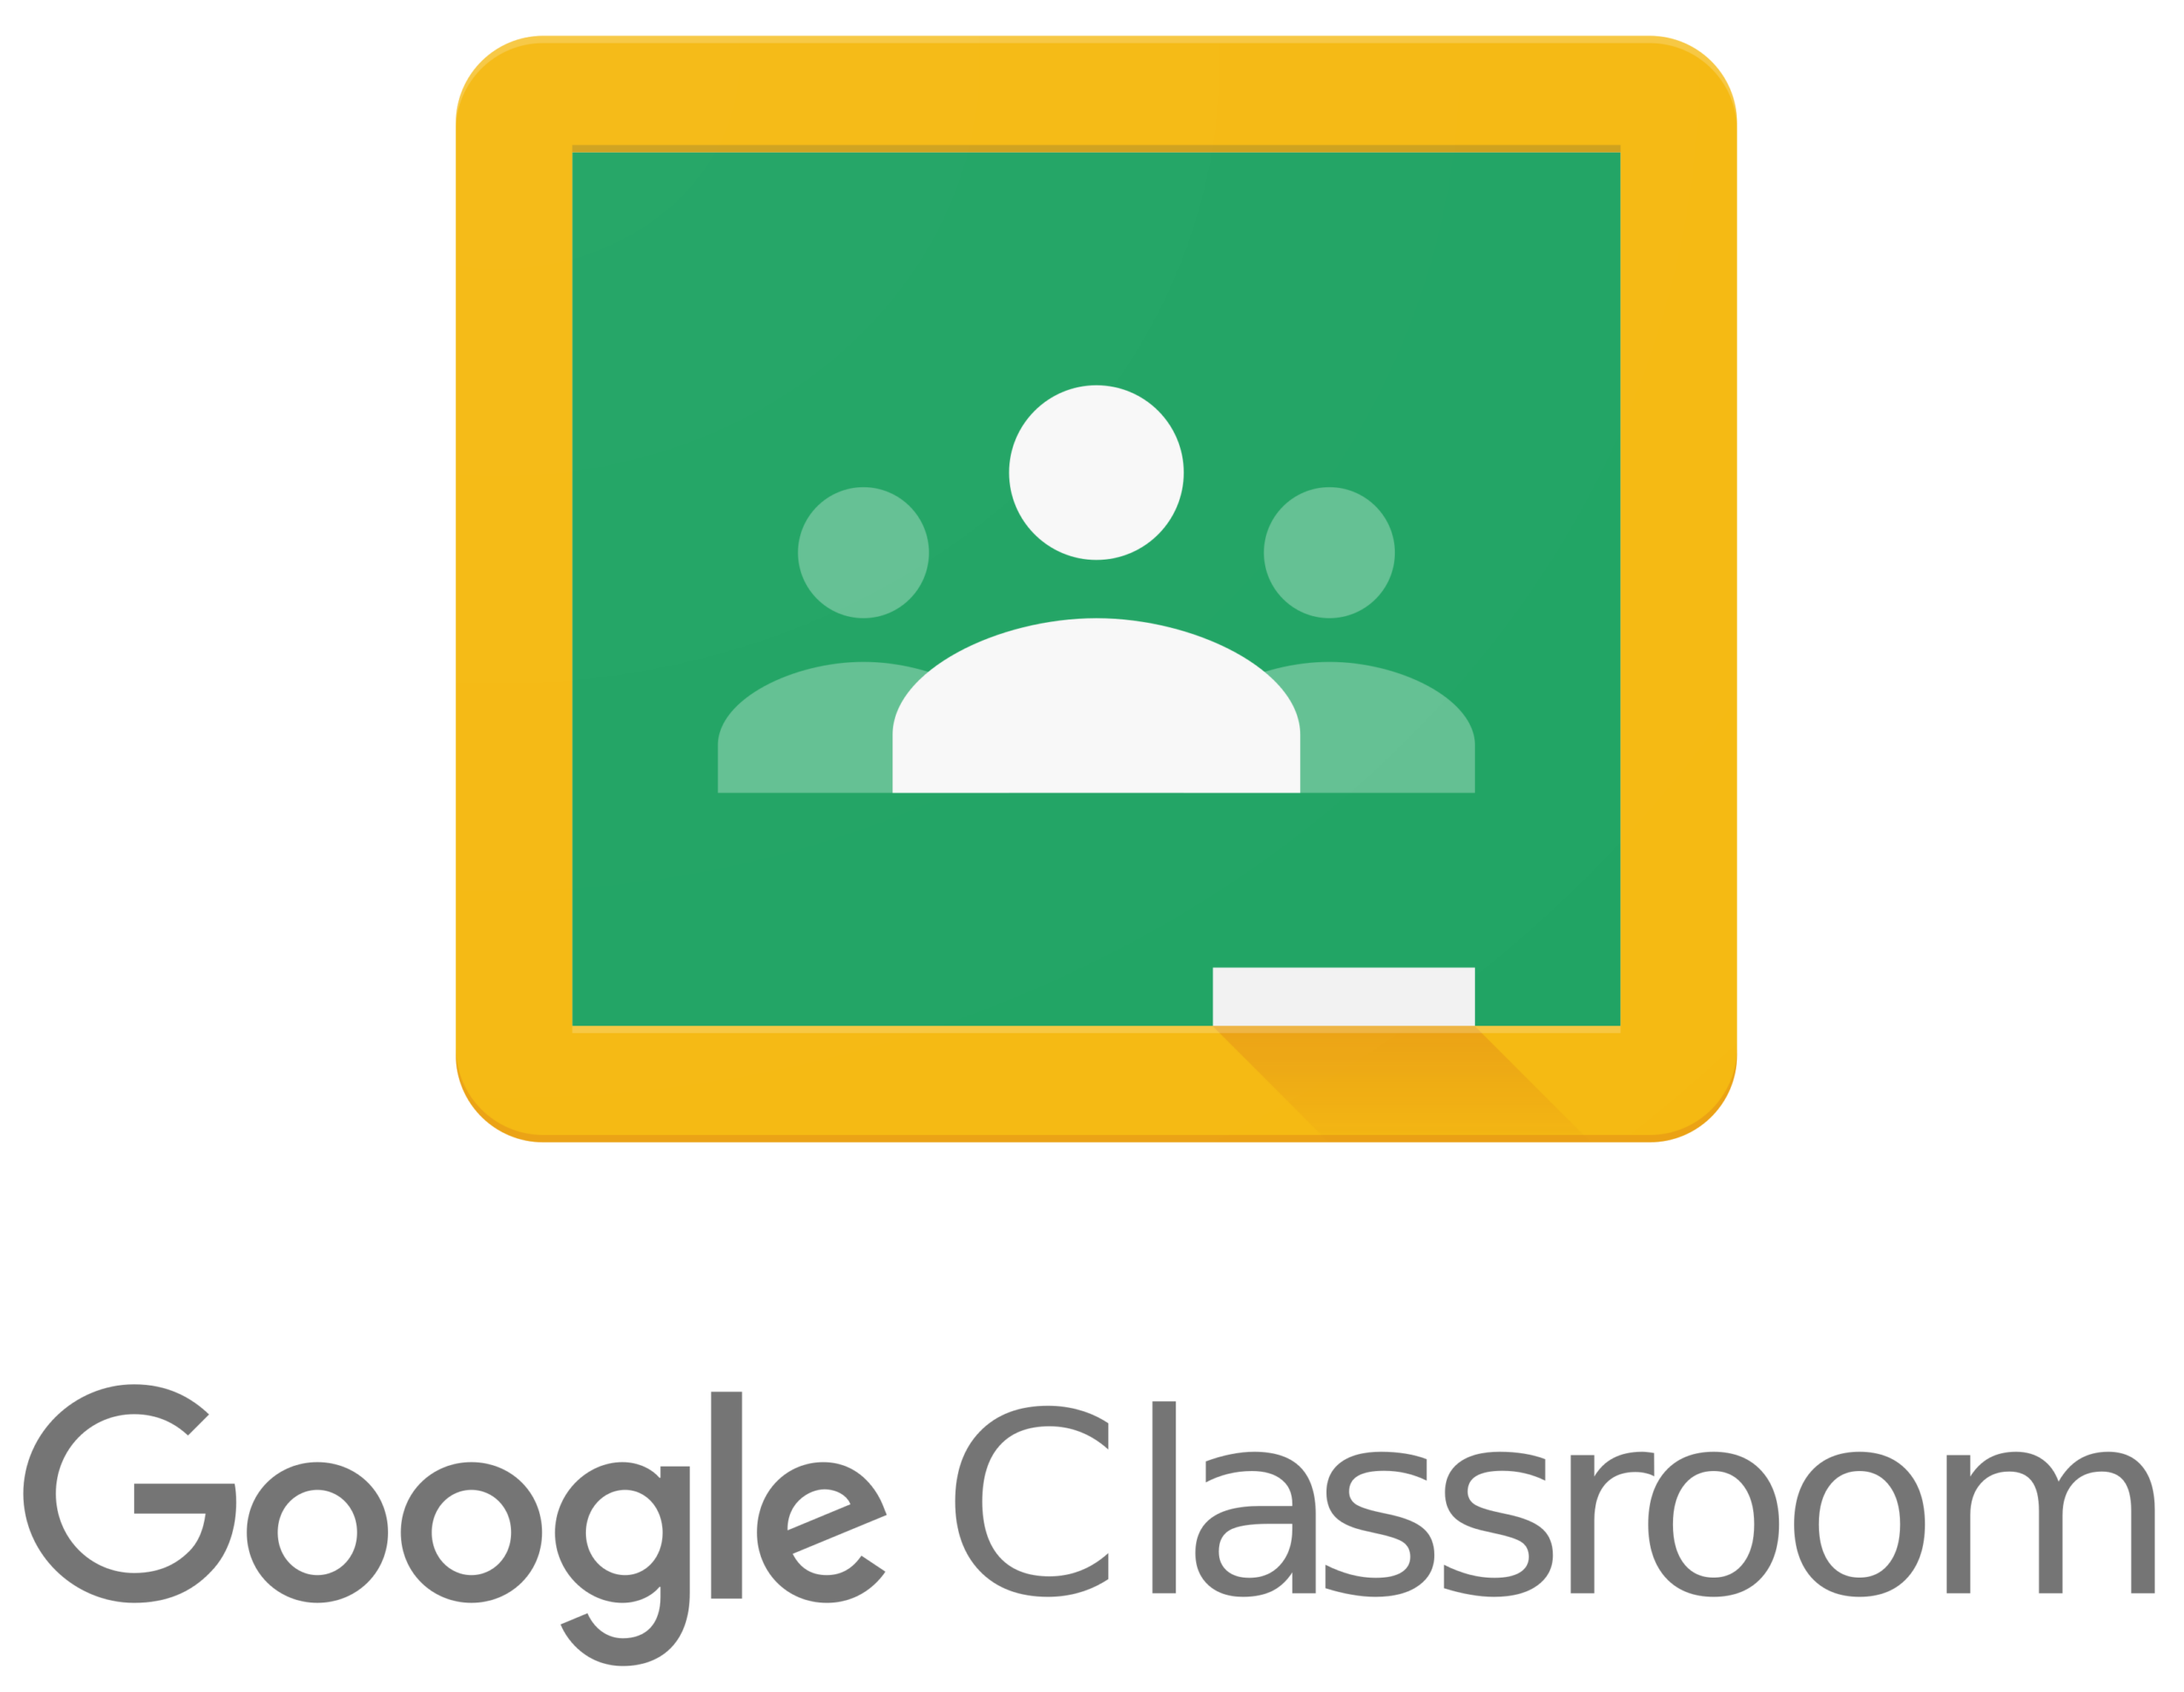 google-classroom-logo